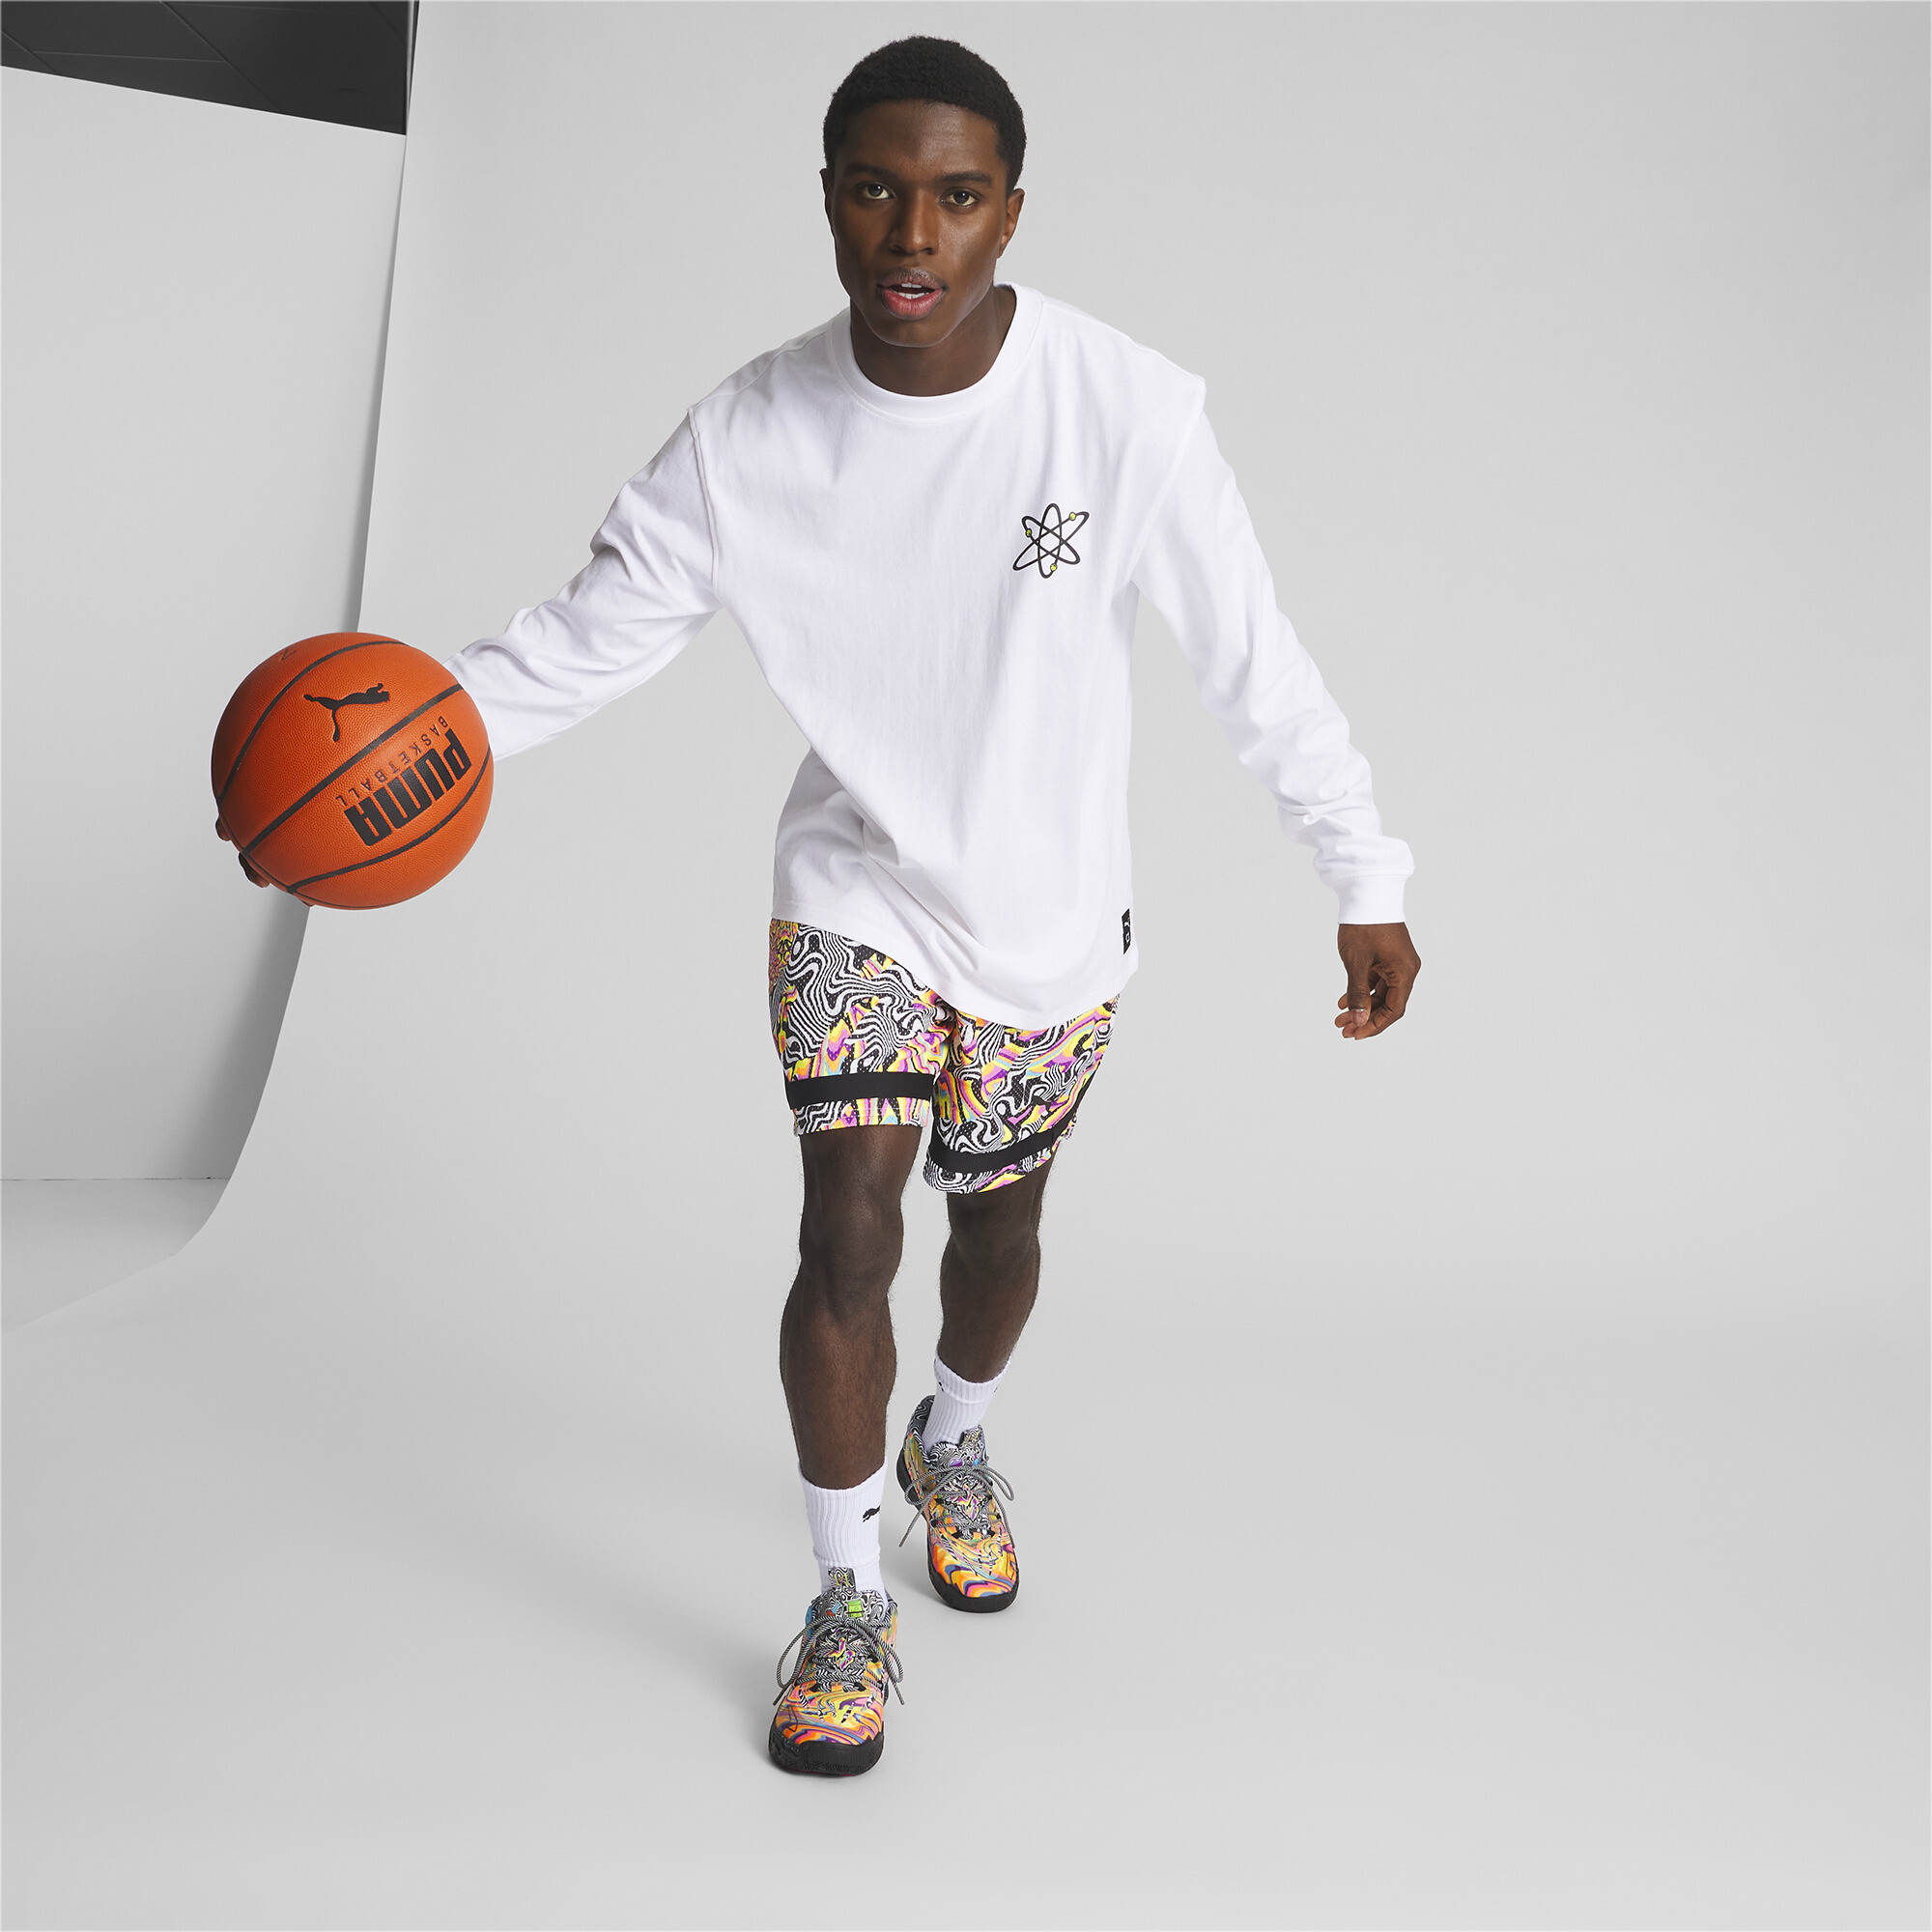 Men's Puma X DEXTER'S LABORATORY's Basketball Shorts, Black, Size 4XL, Clothing